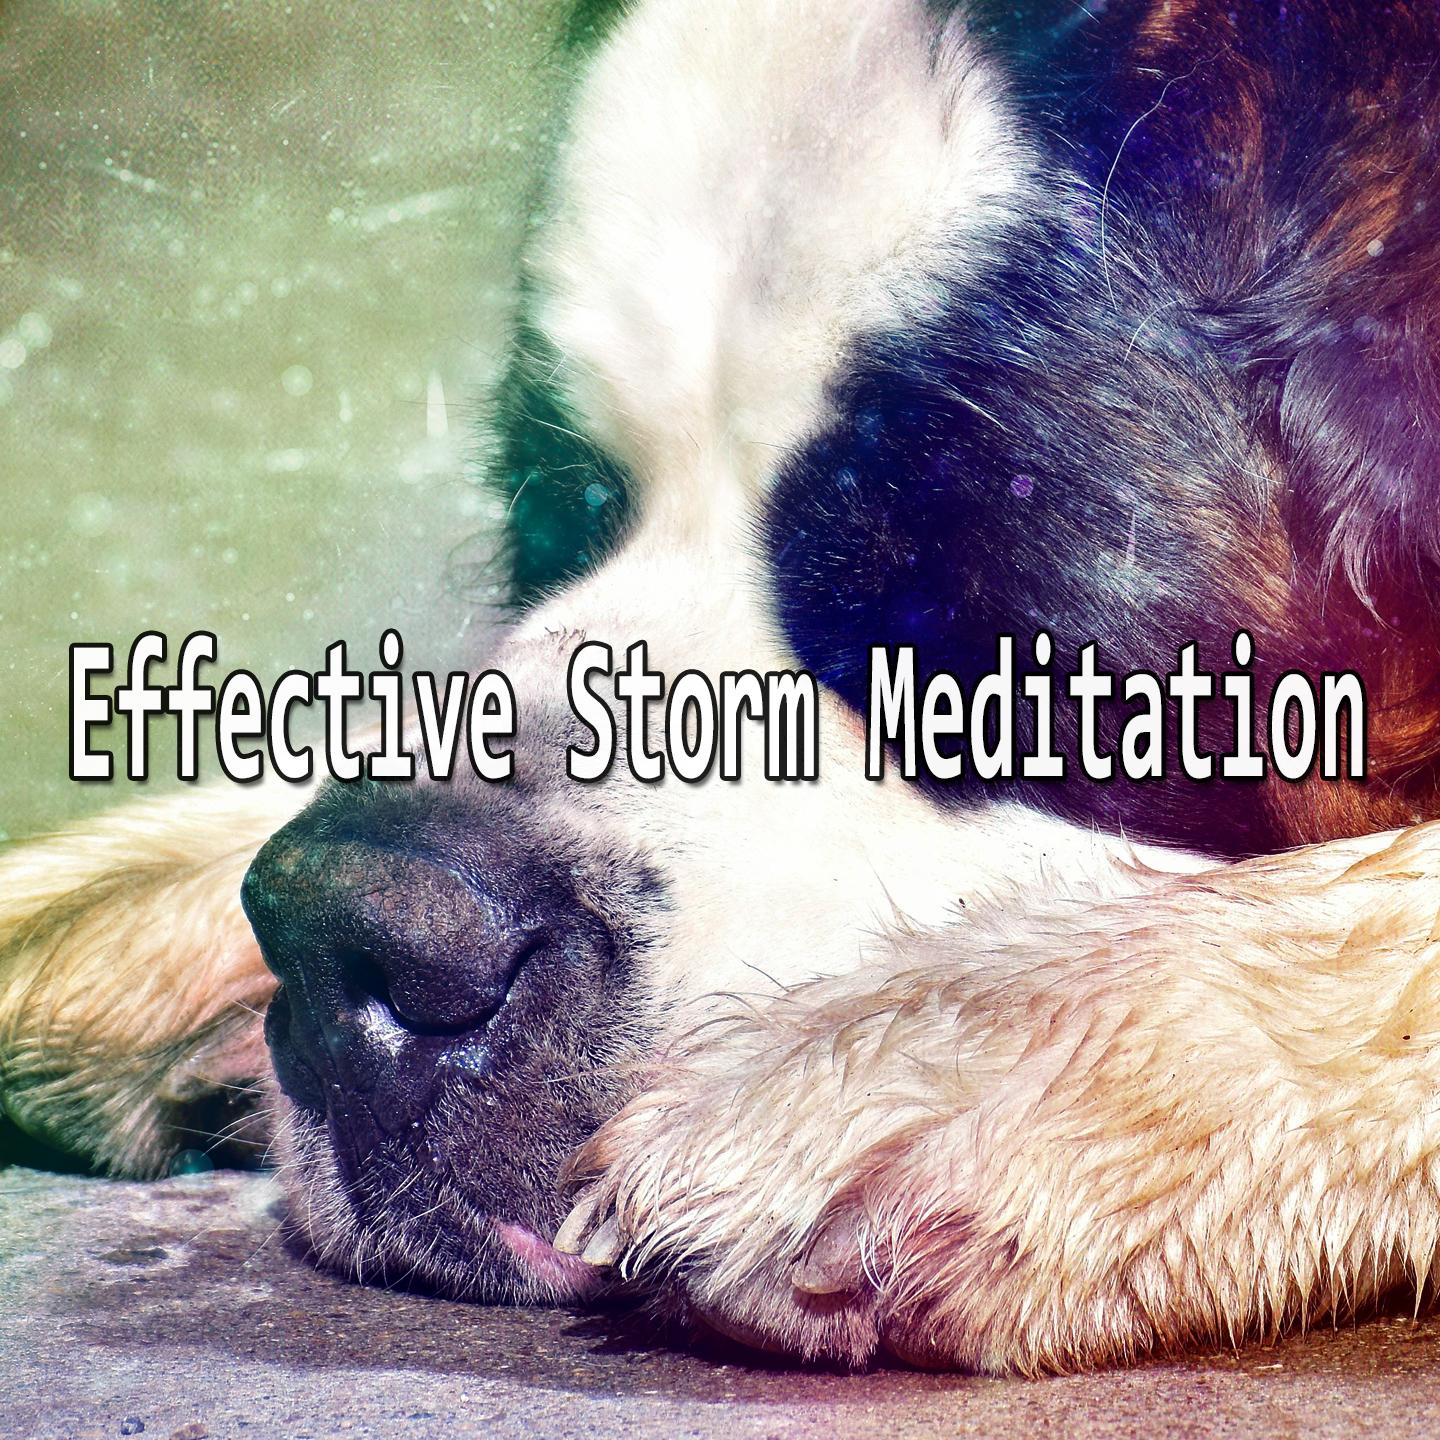 Effective Storm Meditation